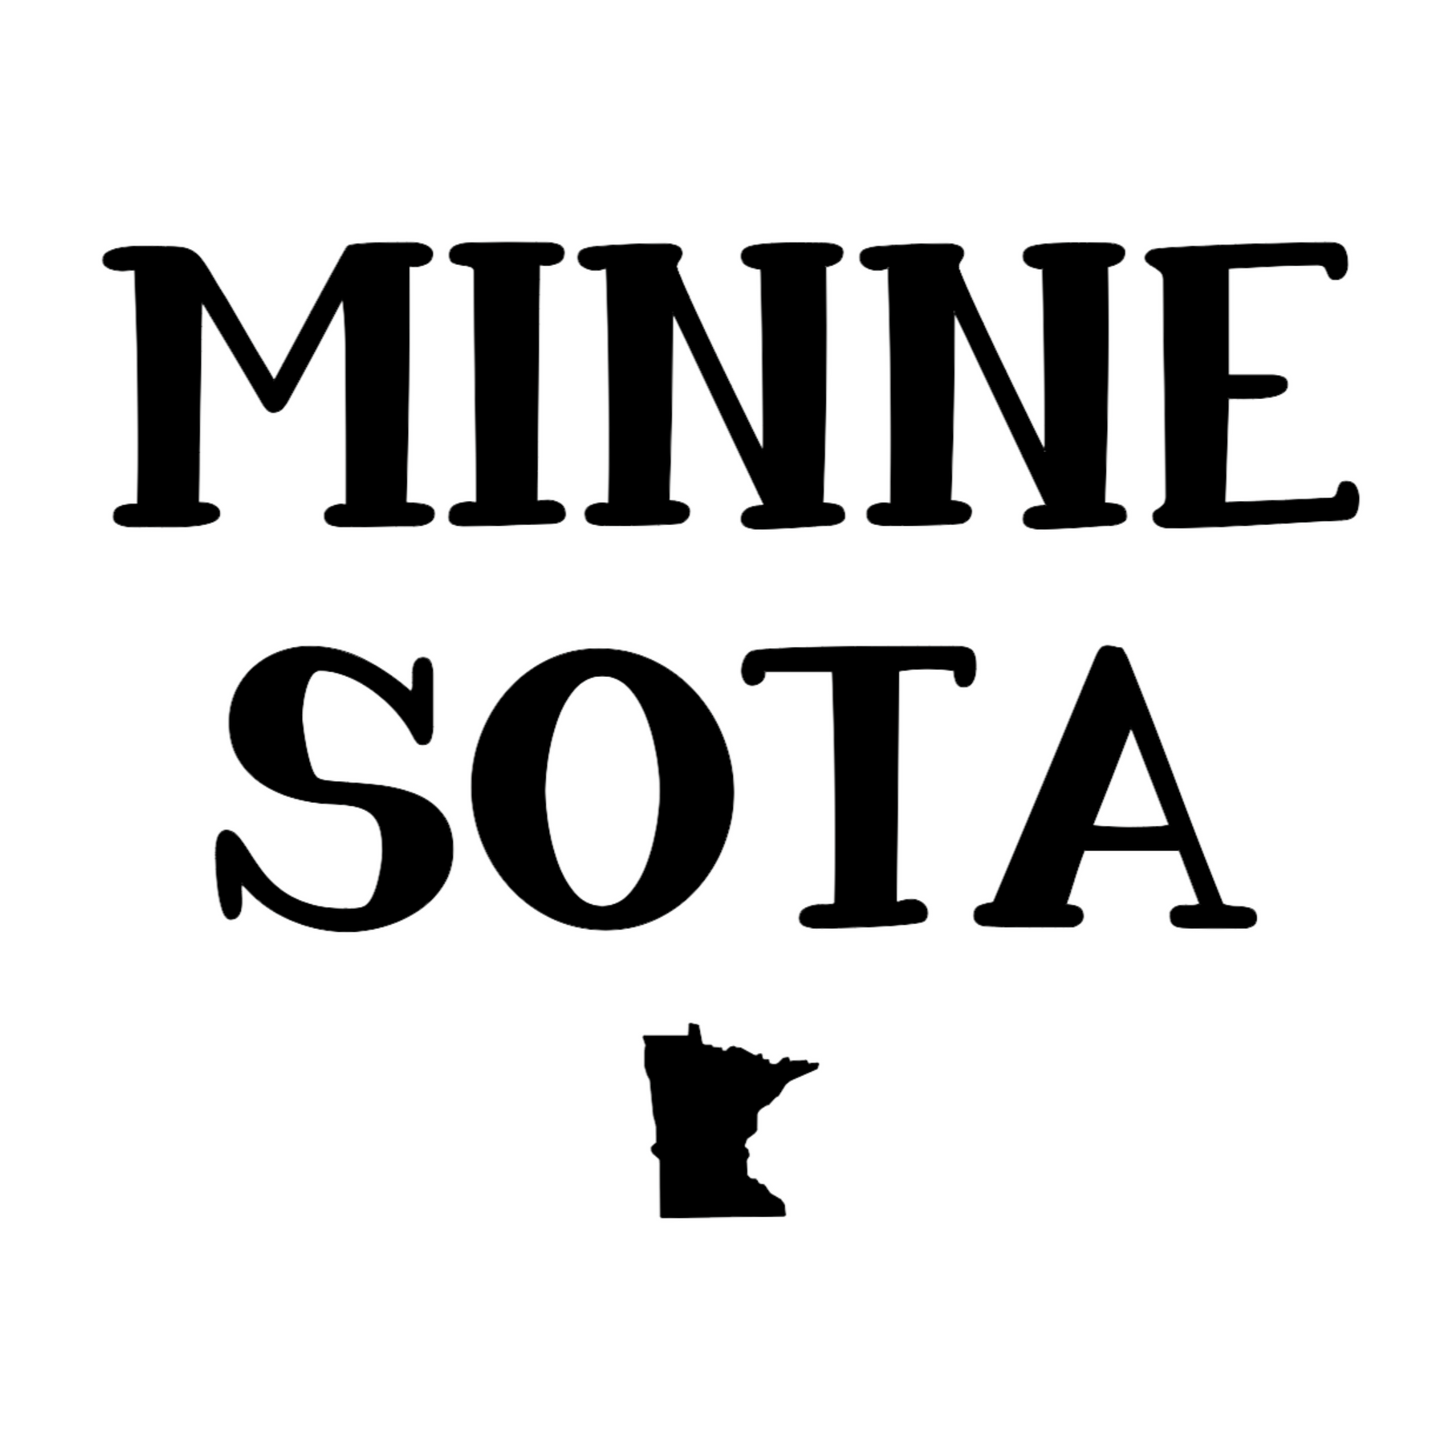 Minnesota black design on a white background